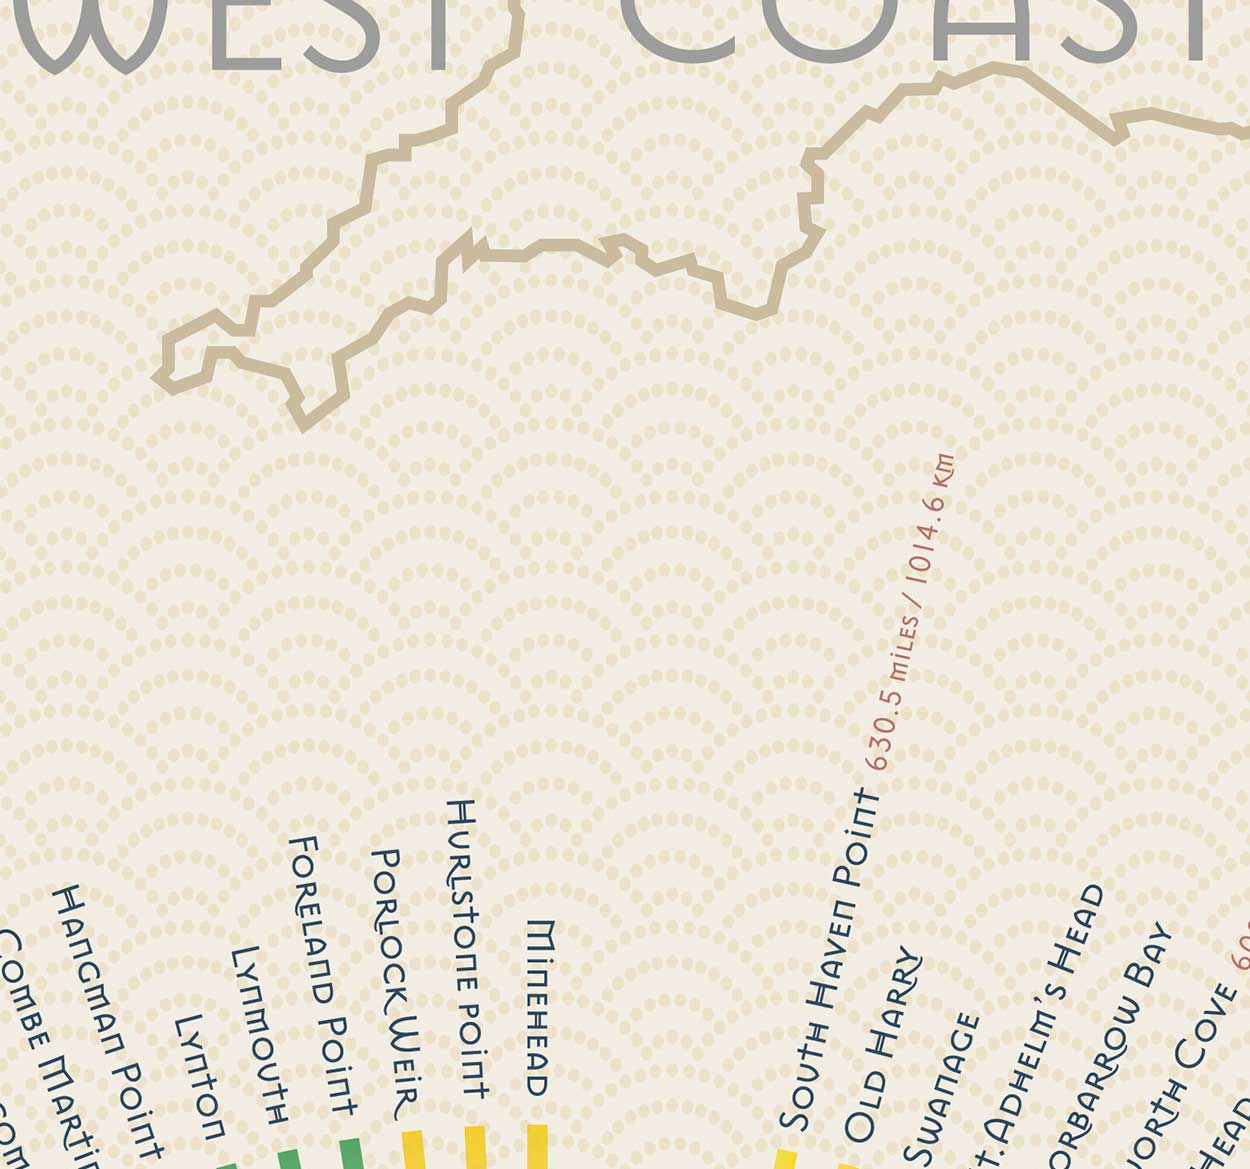 South West coast path infographic poster print. The Salt Path